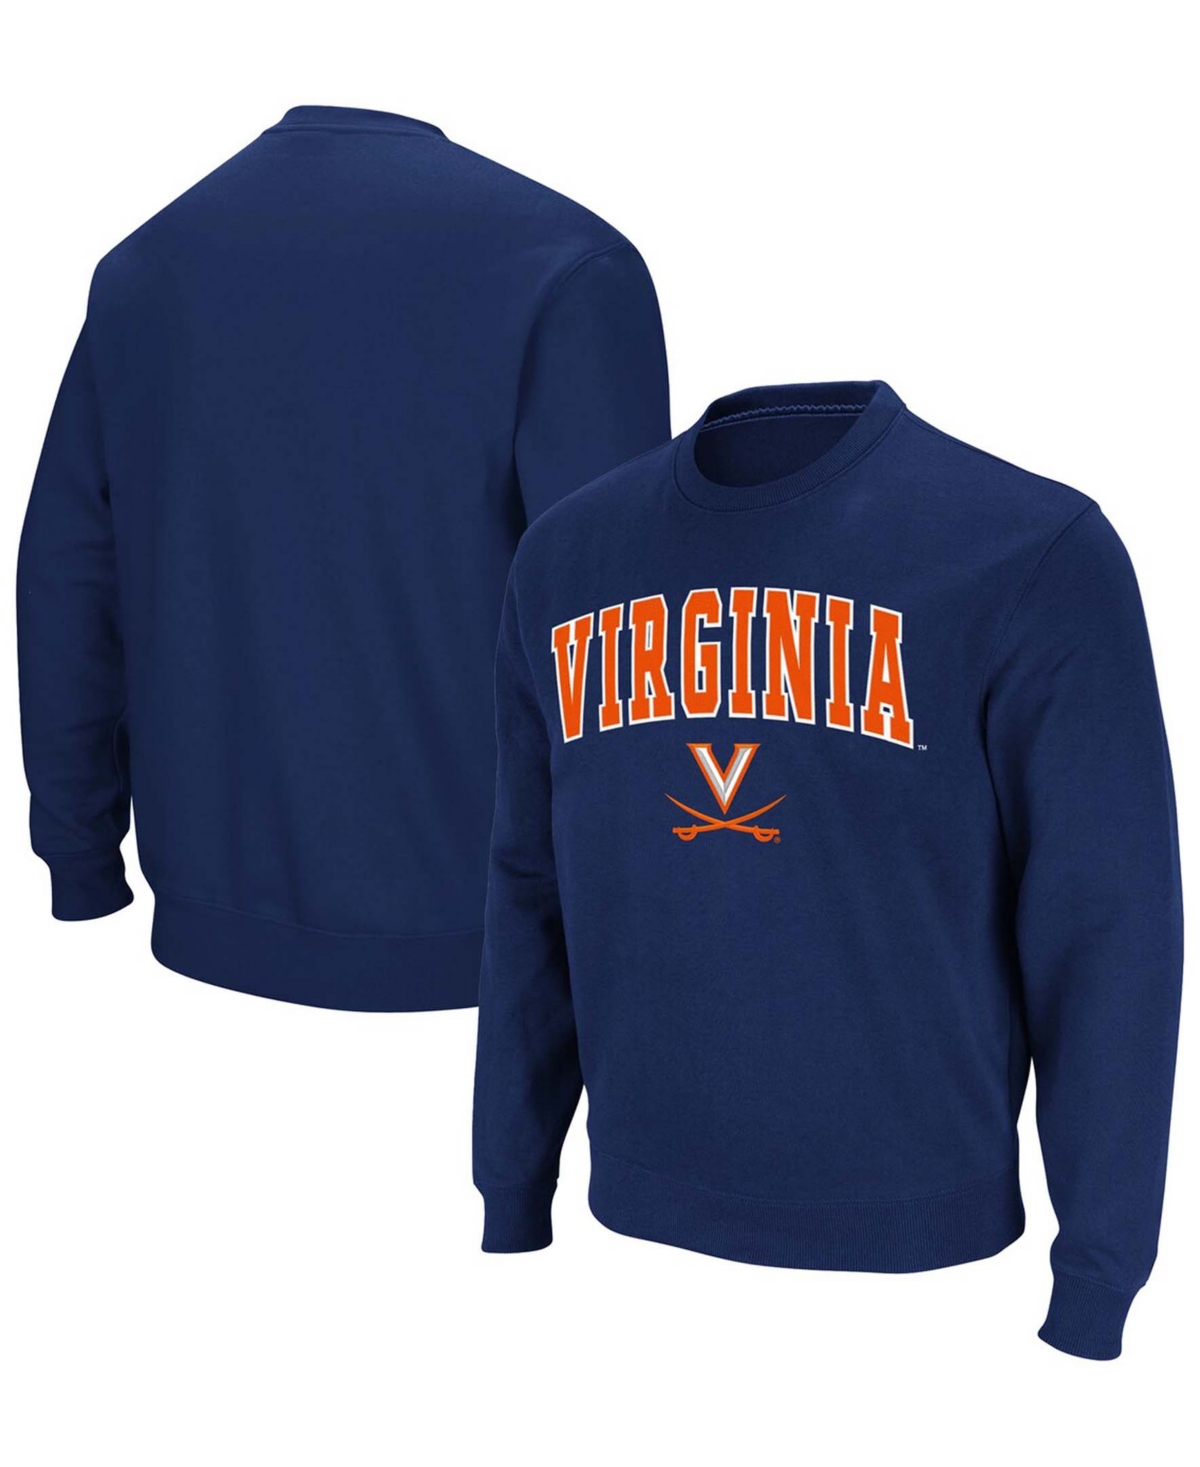 Colosseum Men's Navy Virginia Cavaliers Team Arch Logo Tackle Twill Pullover Sweatshirt